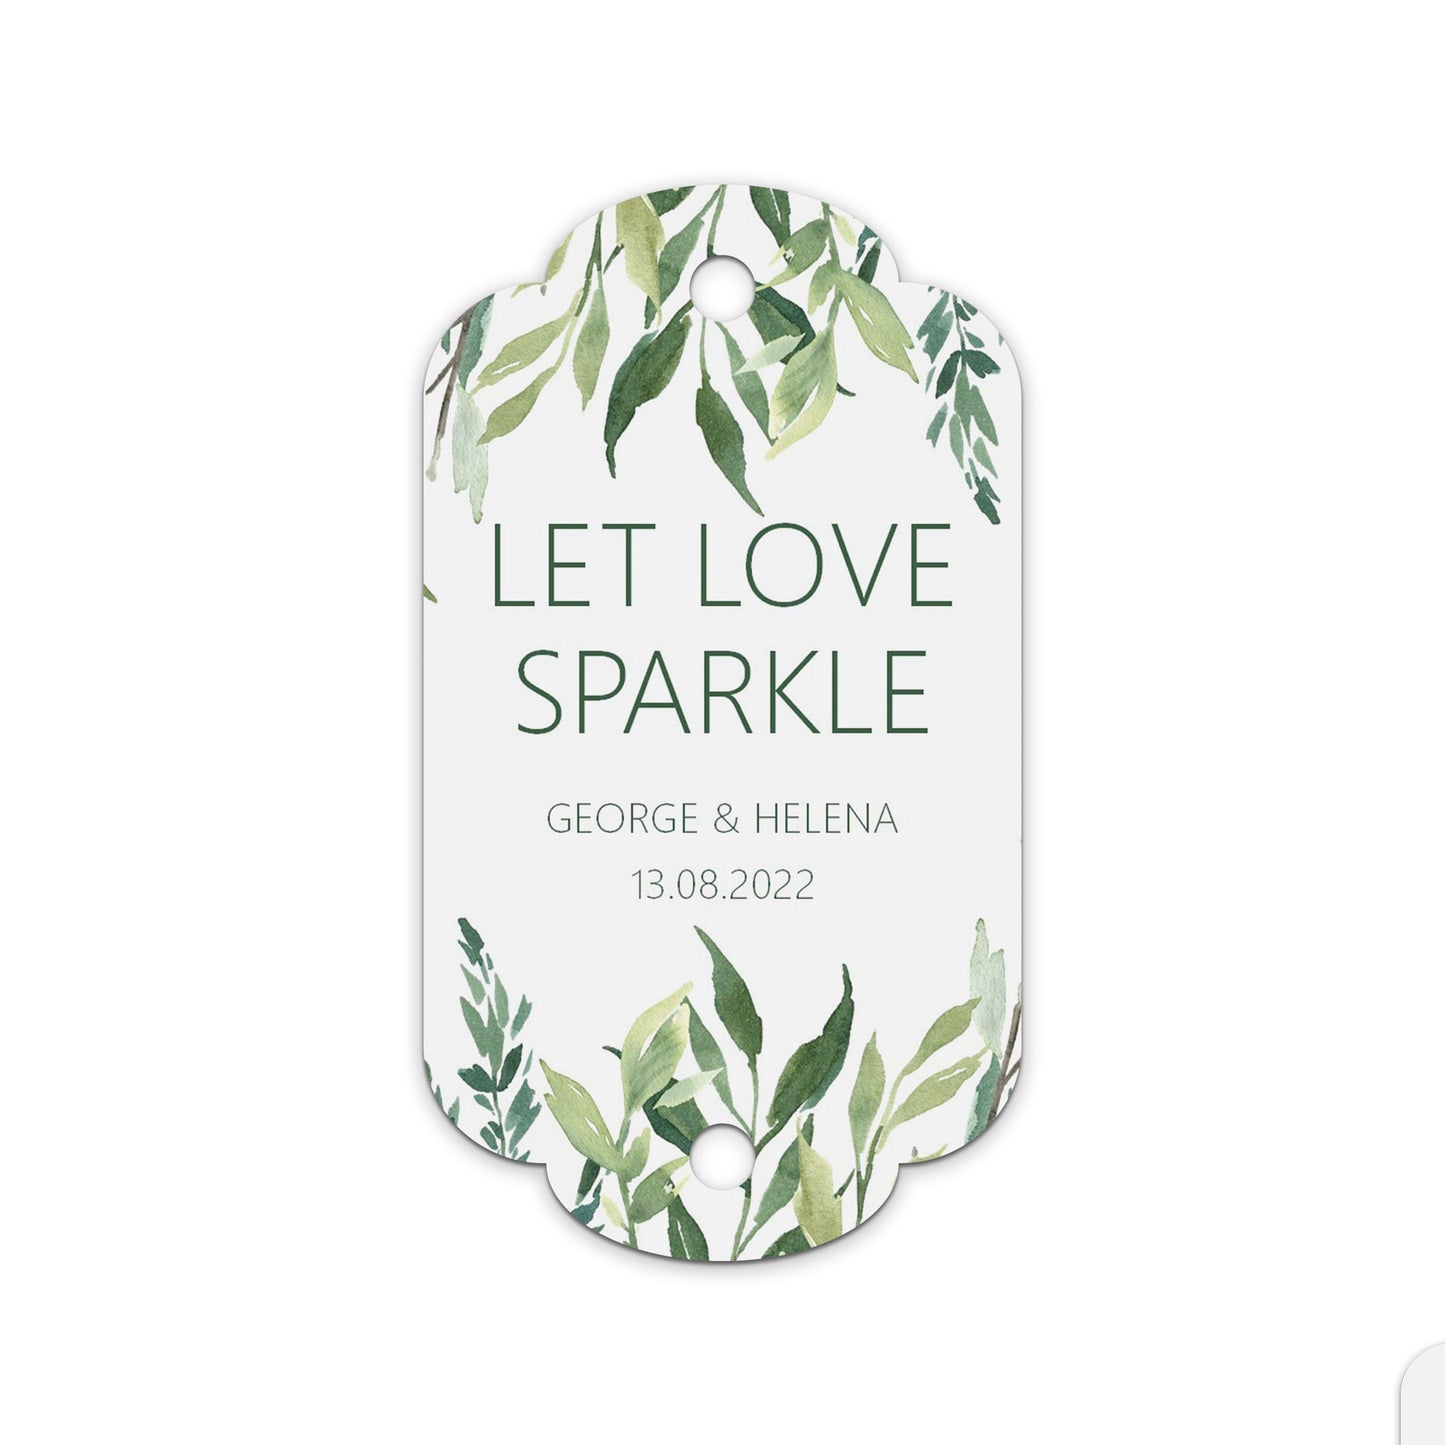 Sparkler Wedding Gift Tags - Greenery